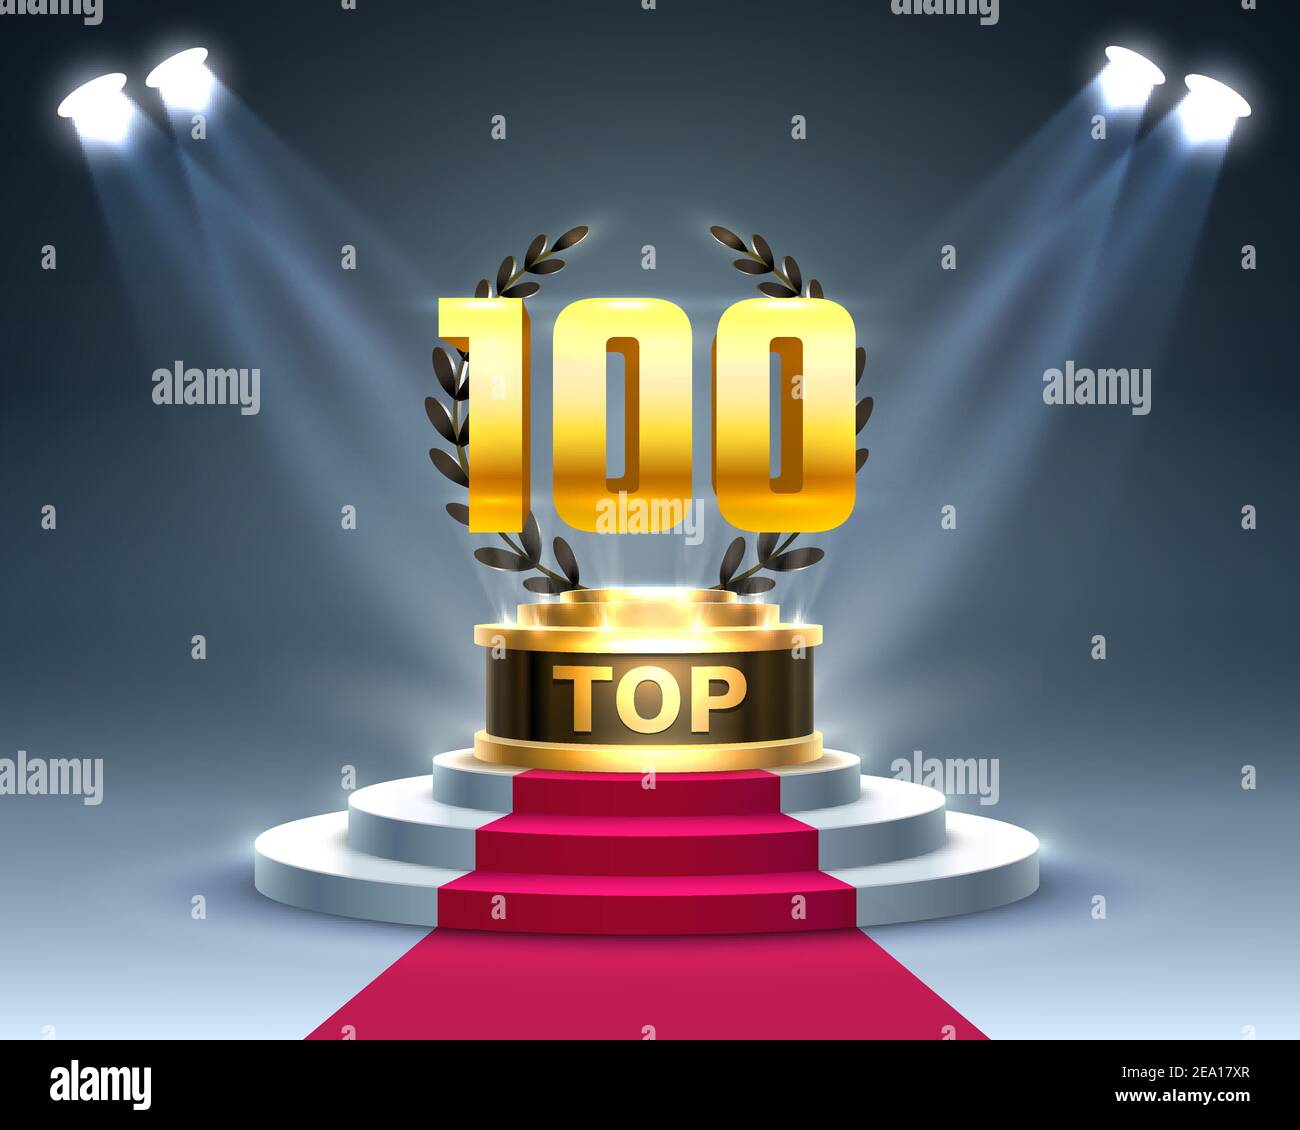 Top 100 best podium award sign, golden object. Vector illustration Stock Vector